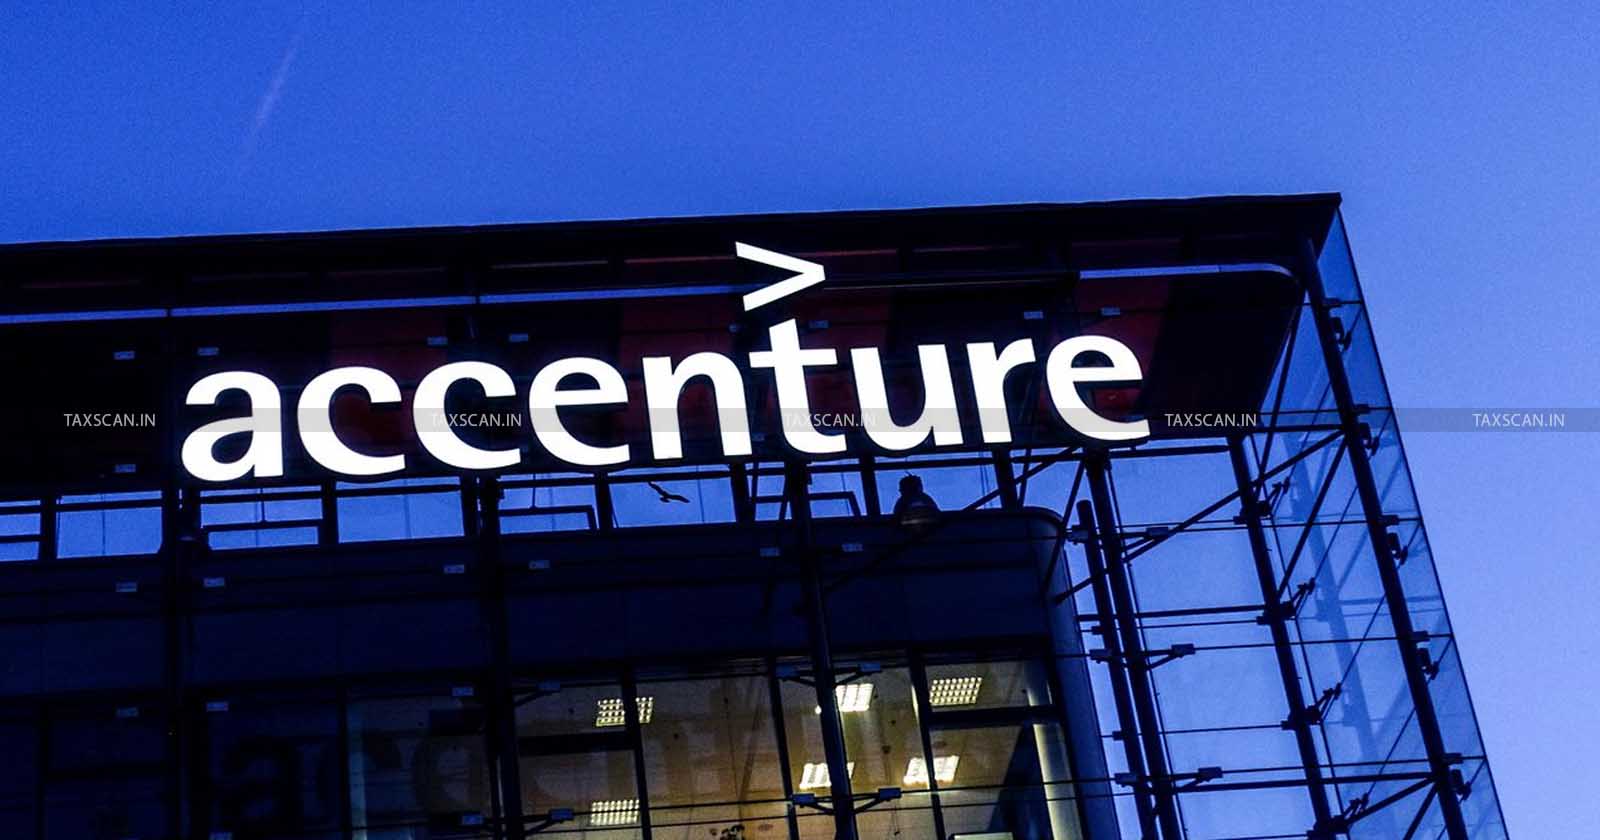 B. Com - B.com Vacancy- accenture vacancy - Accenture - taxscan